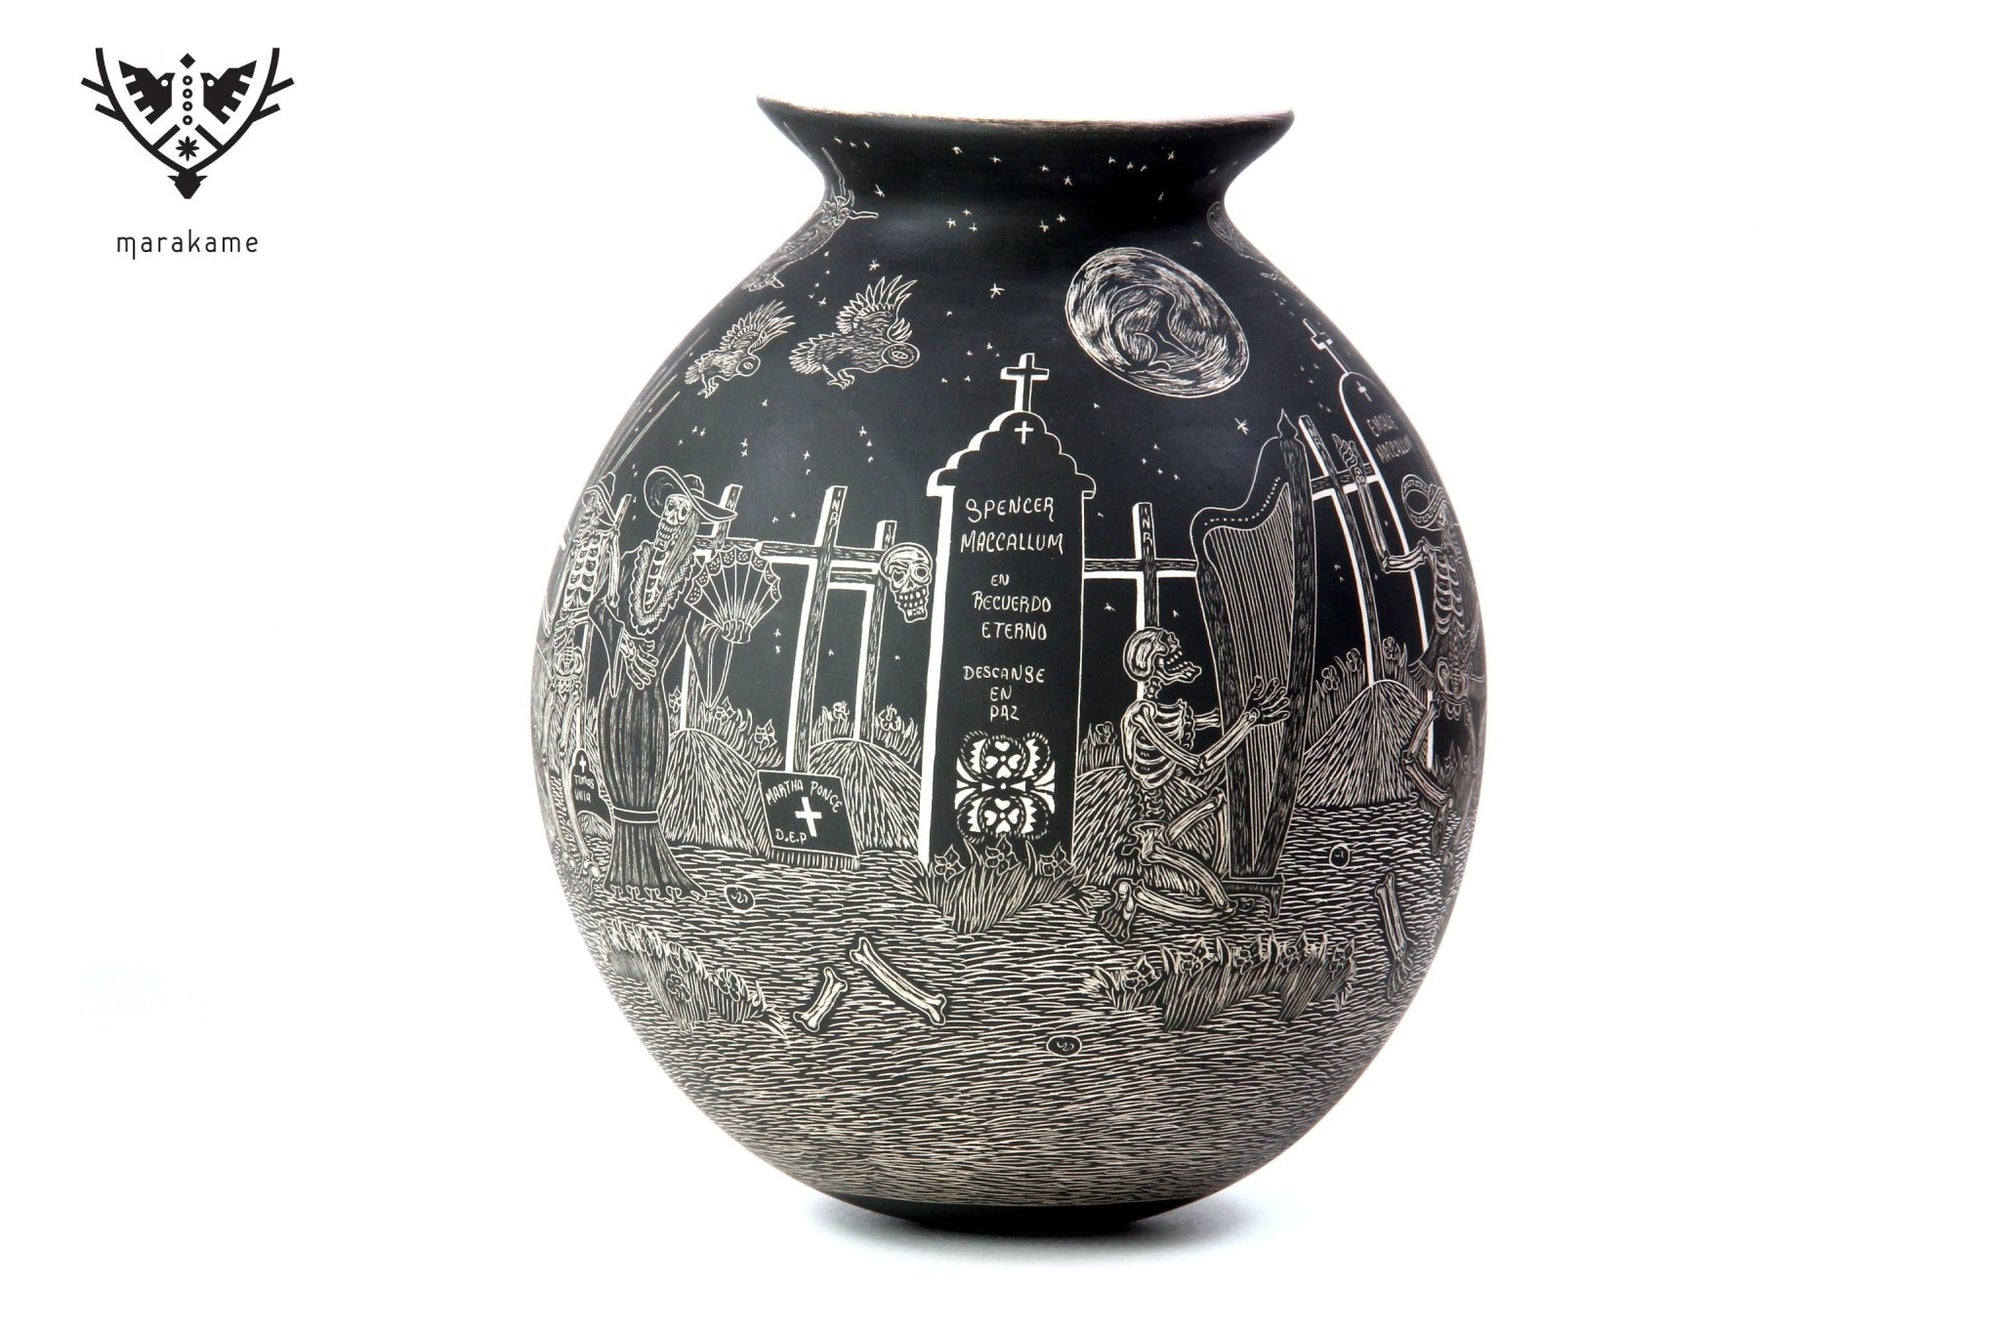 Mata Ortiz ceramics - Day of the Dead - Pantheon at night - Huichol art - Marakame